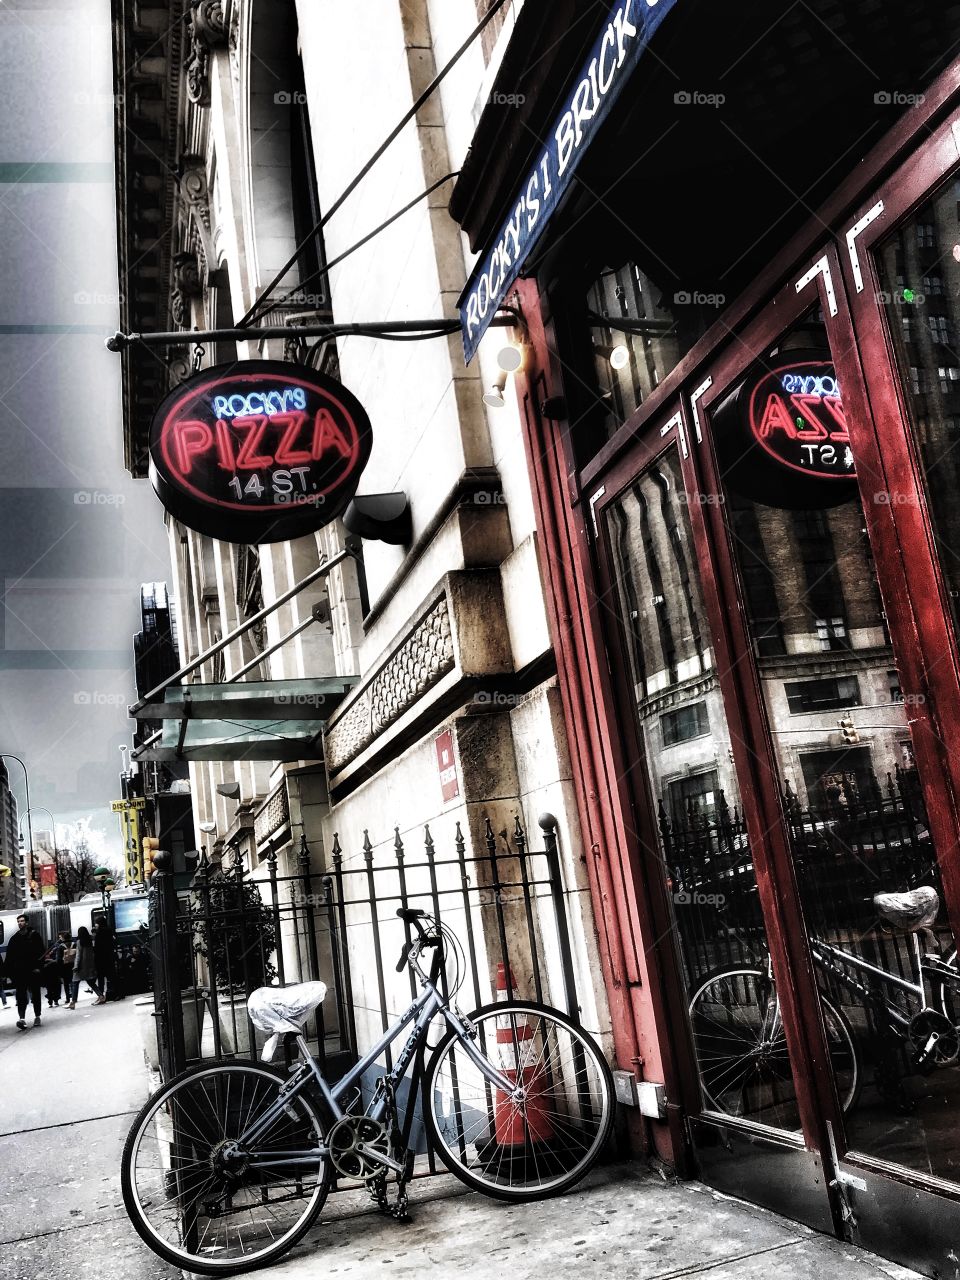 Pizza shop in Greenwich Village New York City 